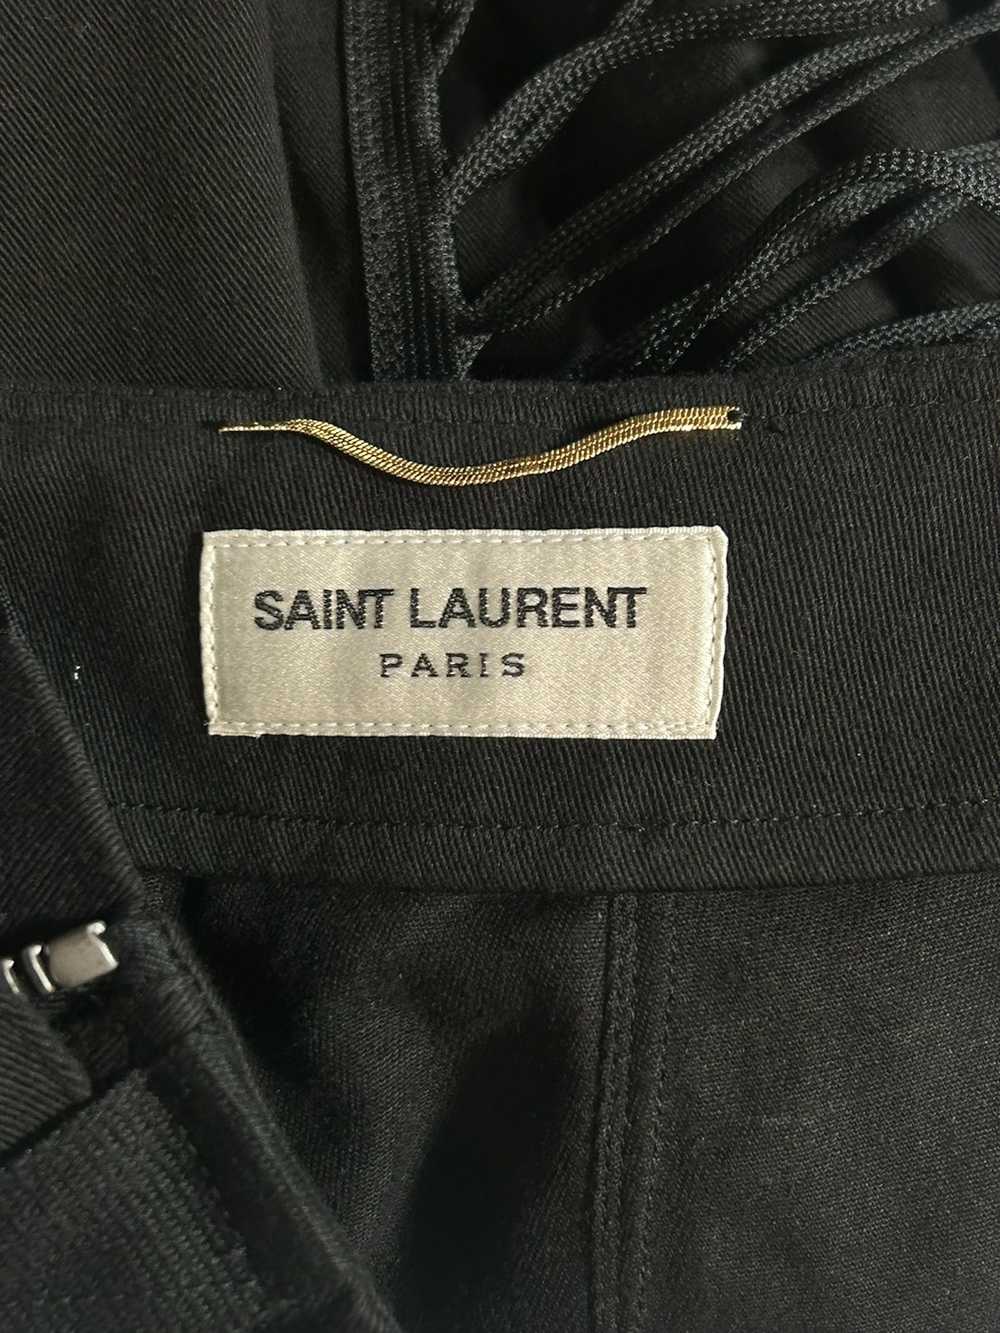 Saint Laurent Paris NWT! SS19 Runway Aviator Lace… - image 6